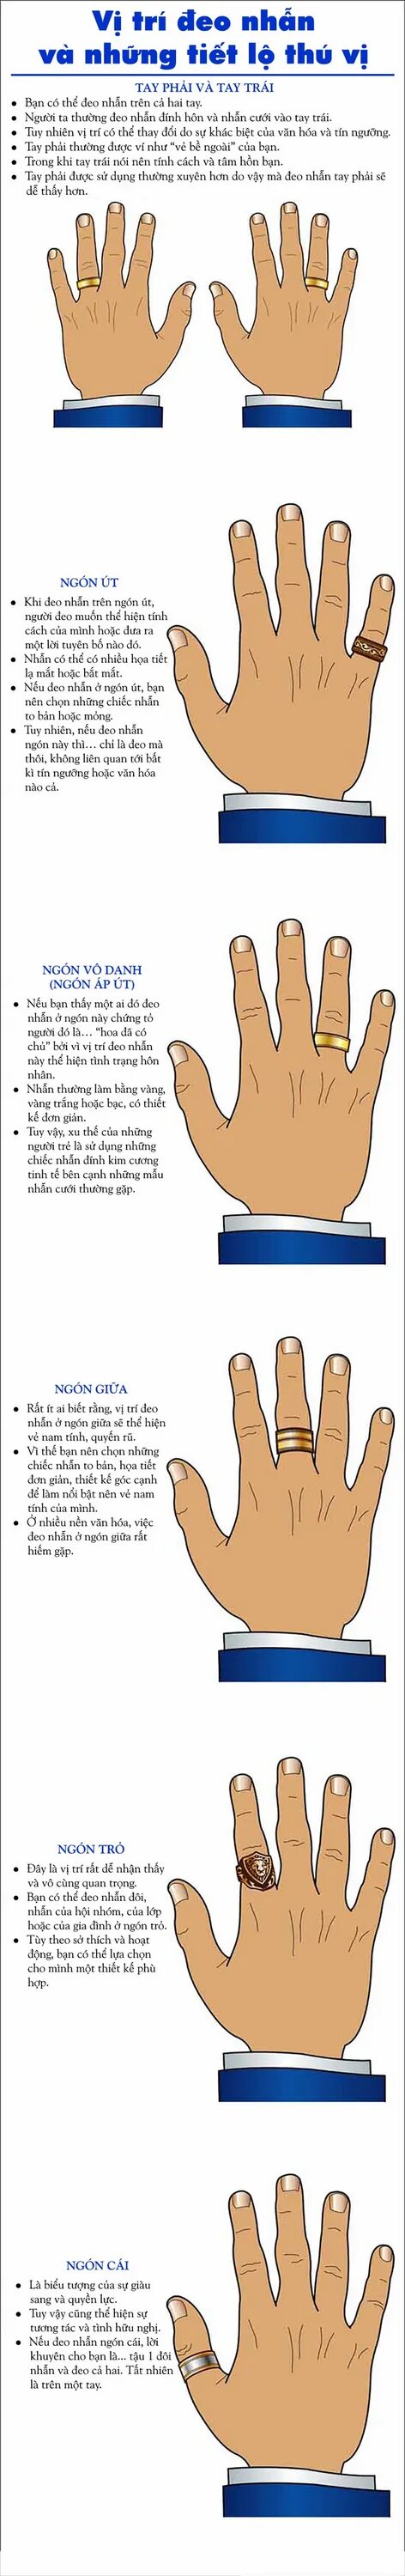 Обозначение ношения колец на пальцах. ЗНАЧЕНИЕКОЛЕЦ на пальцахх. Обозначение колец на руке. Смысл колец на пальцах.